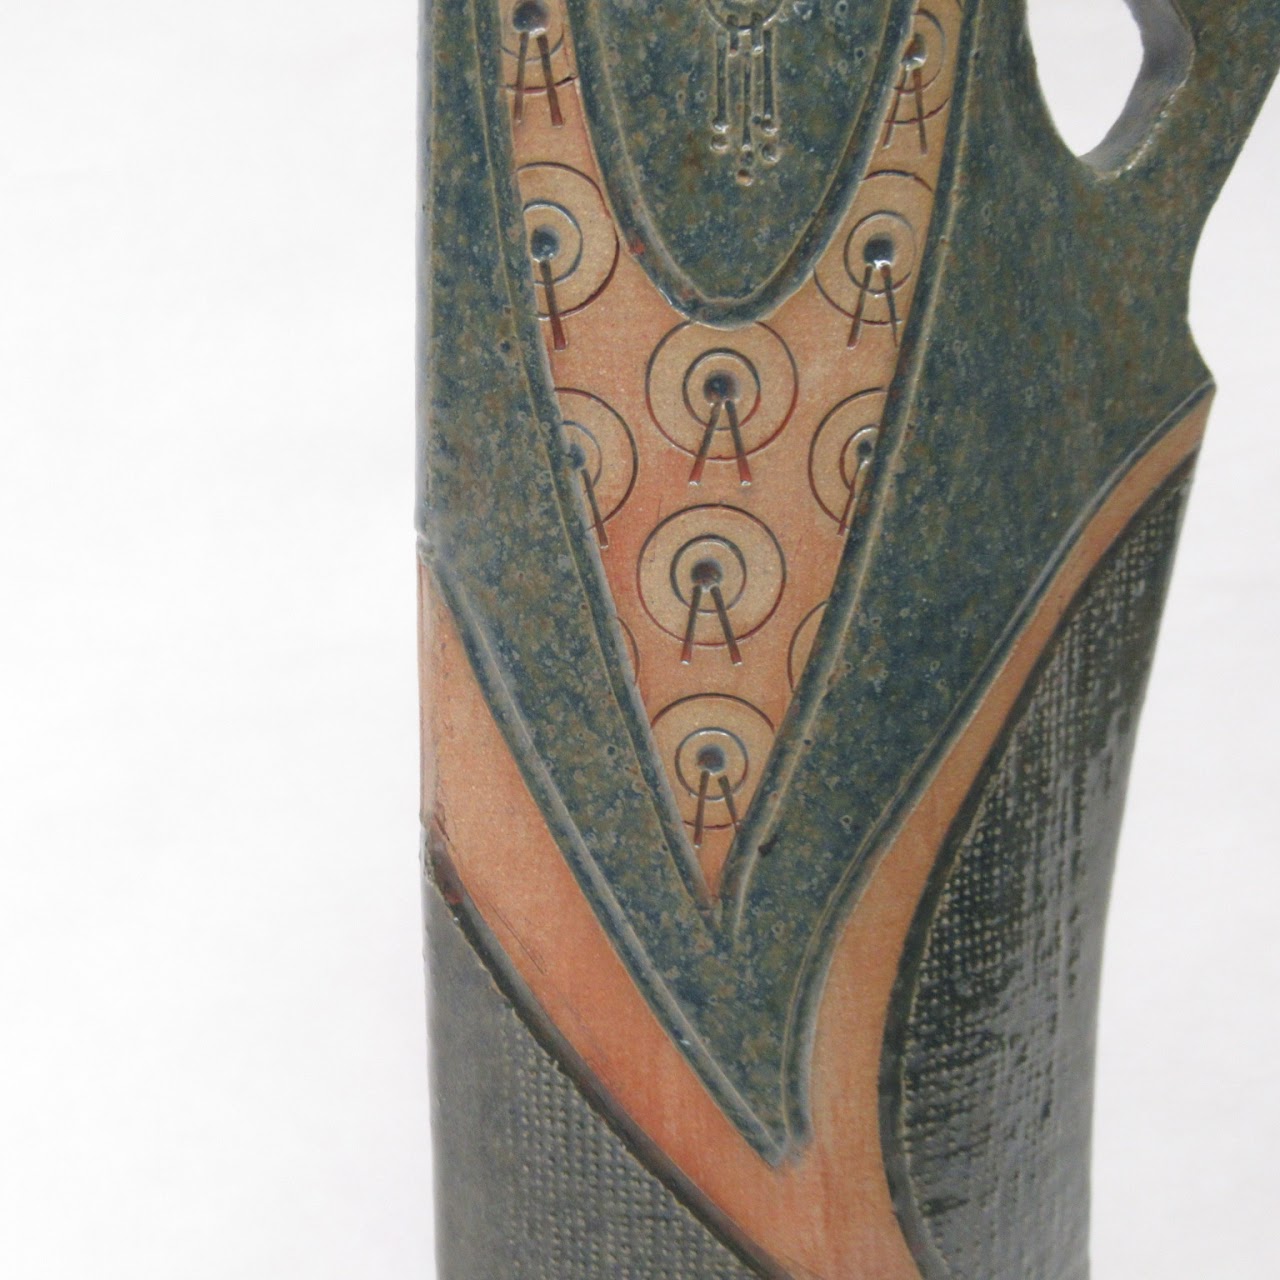 Standing Woman Ceramic Figure